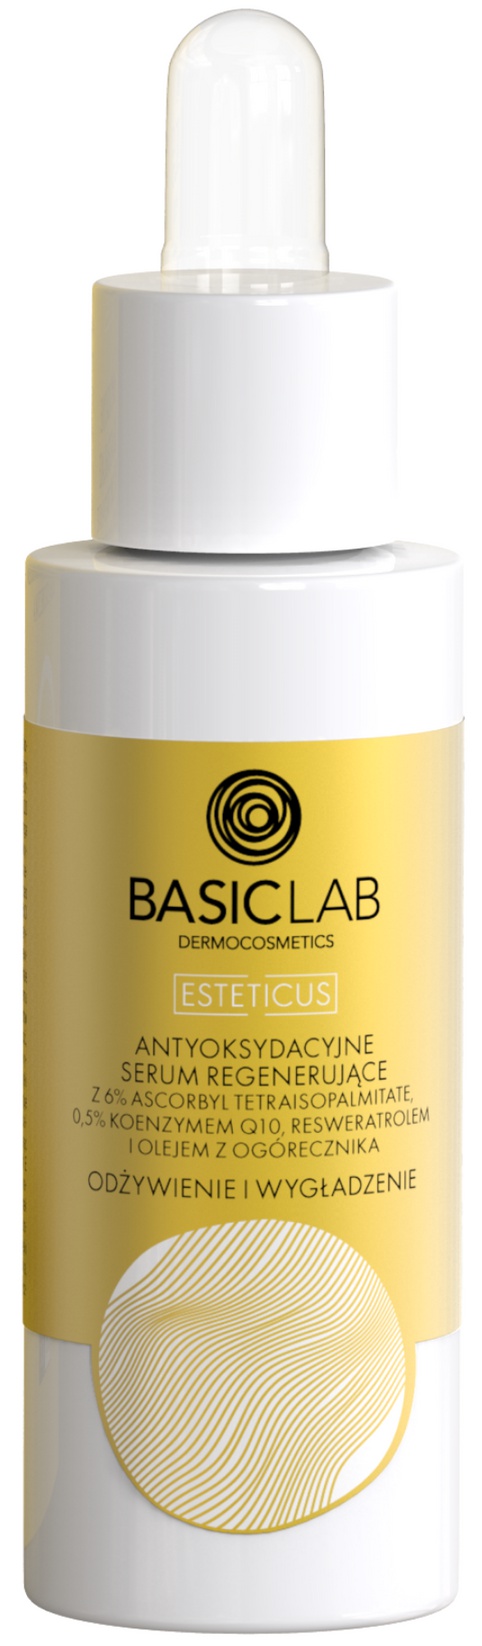 Basiclab Esteticus Regenerating Antioxidant Serum with 6% Ascorbyl Tetraisopalmitate